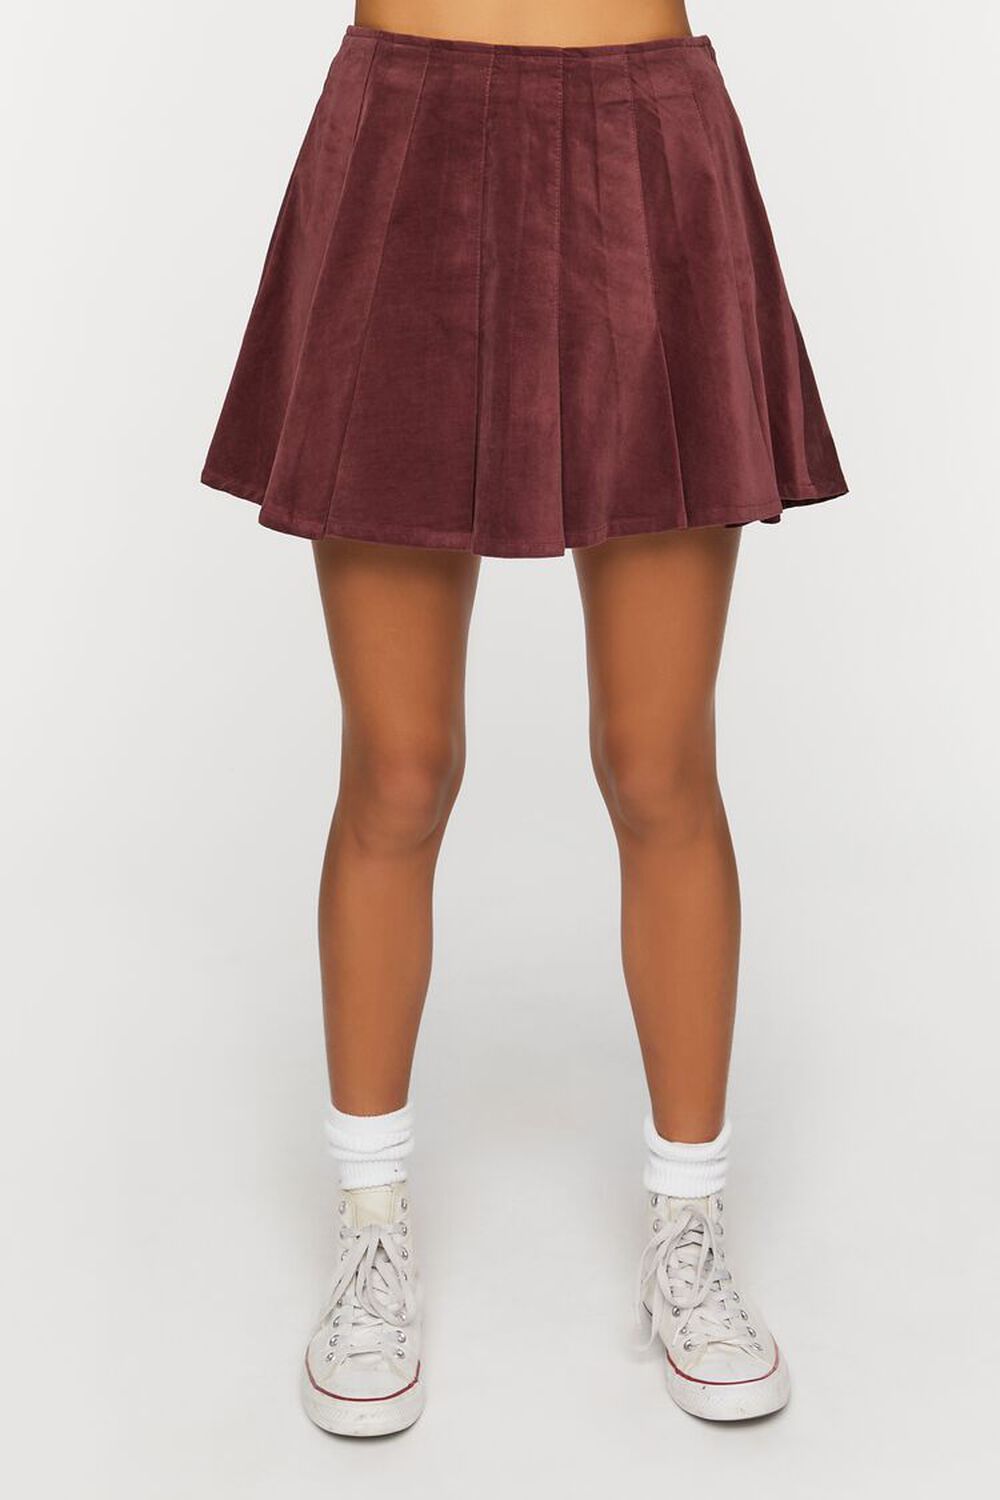 BROWN Corduroy Pleated Mini Skirt, image 2